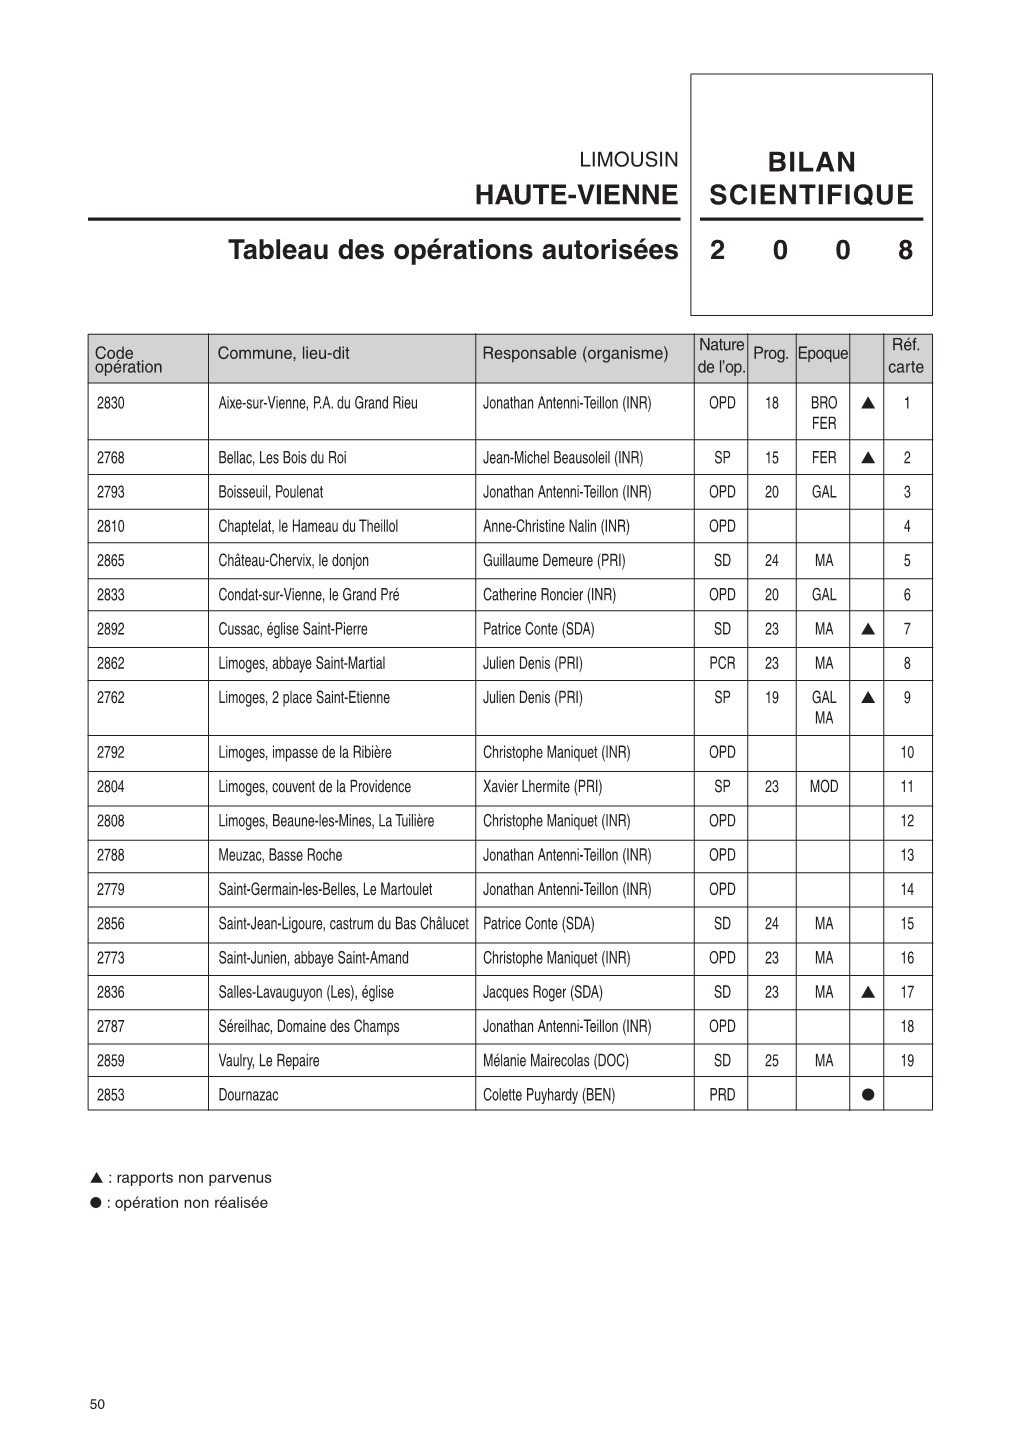 BSR 2008 Haute-Vienne PDF 1 MO